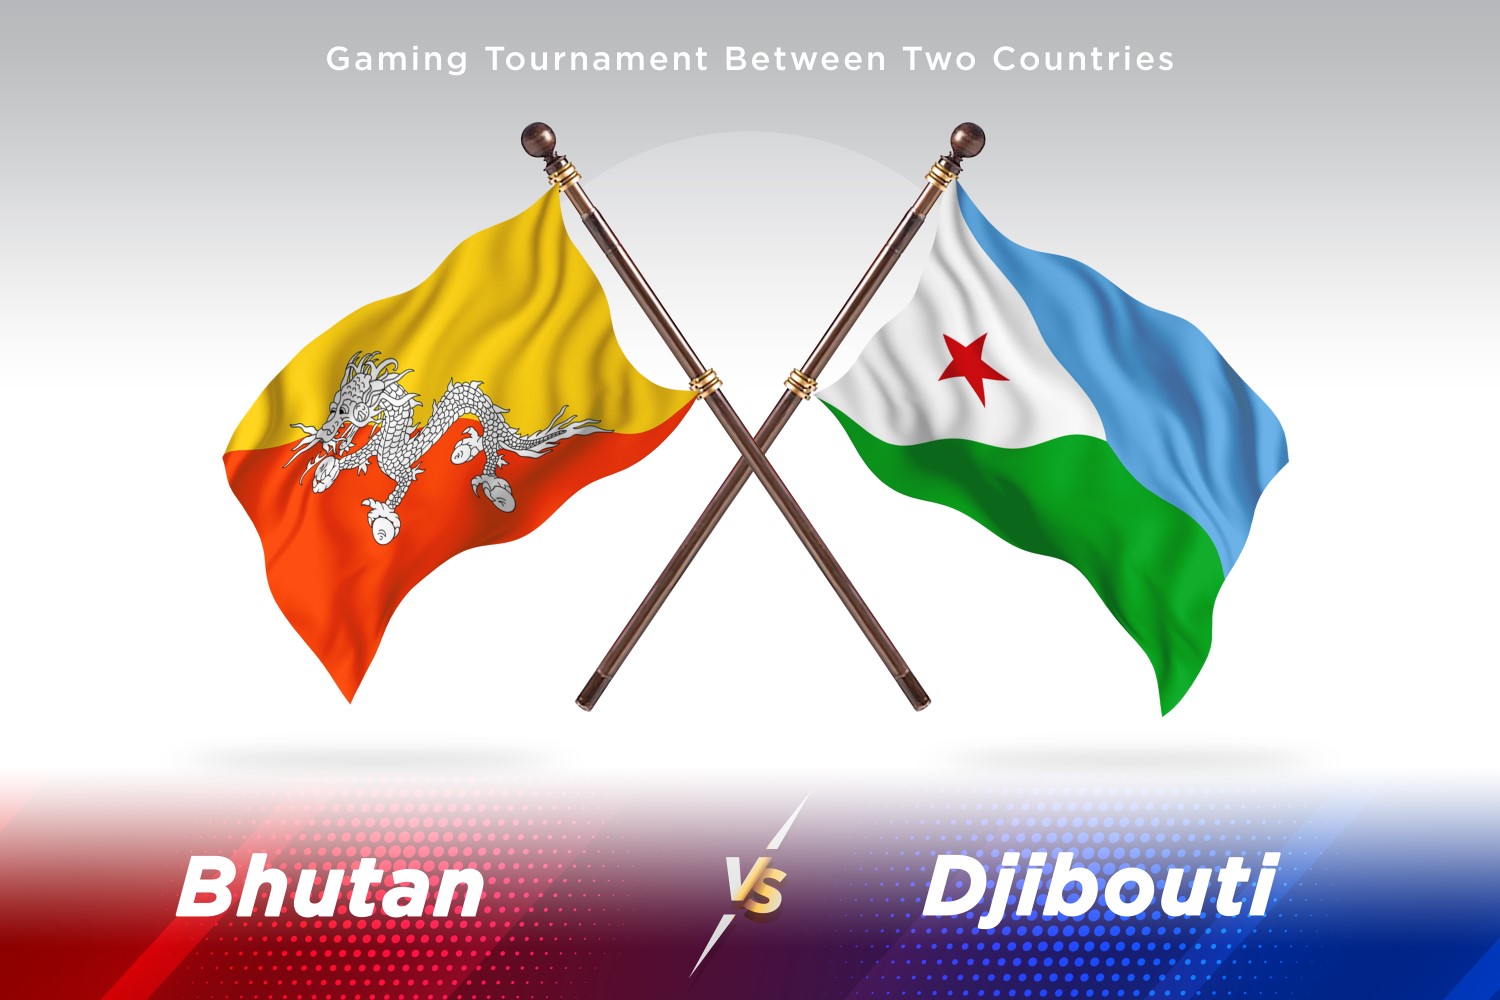 Bhutan versus Djibouti Two Flags